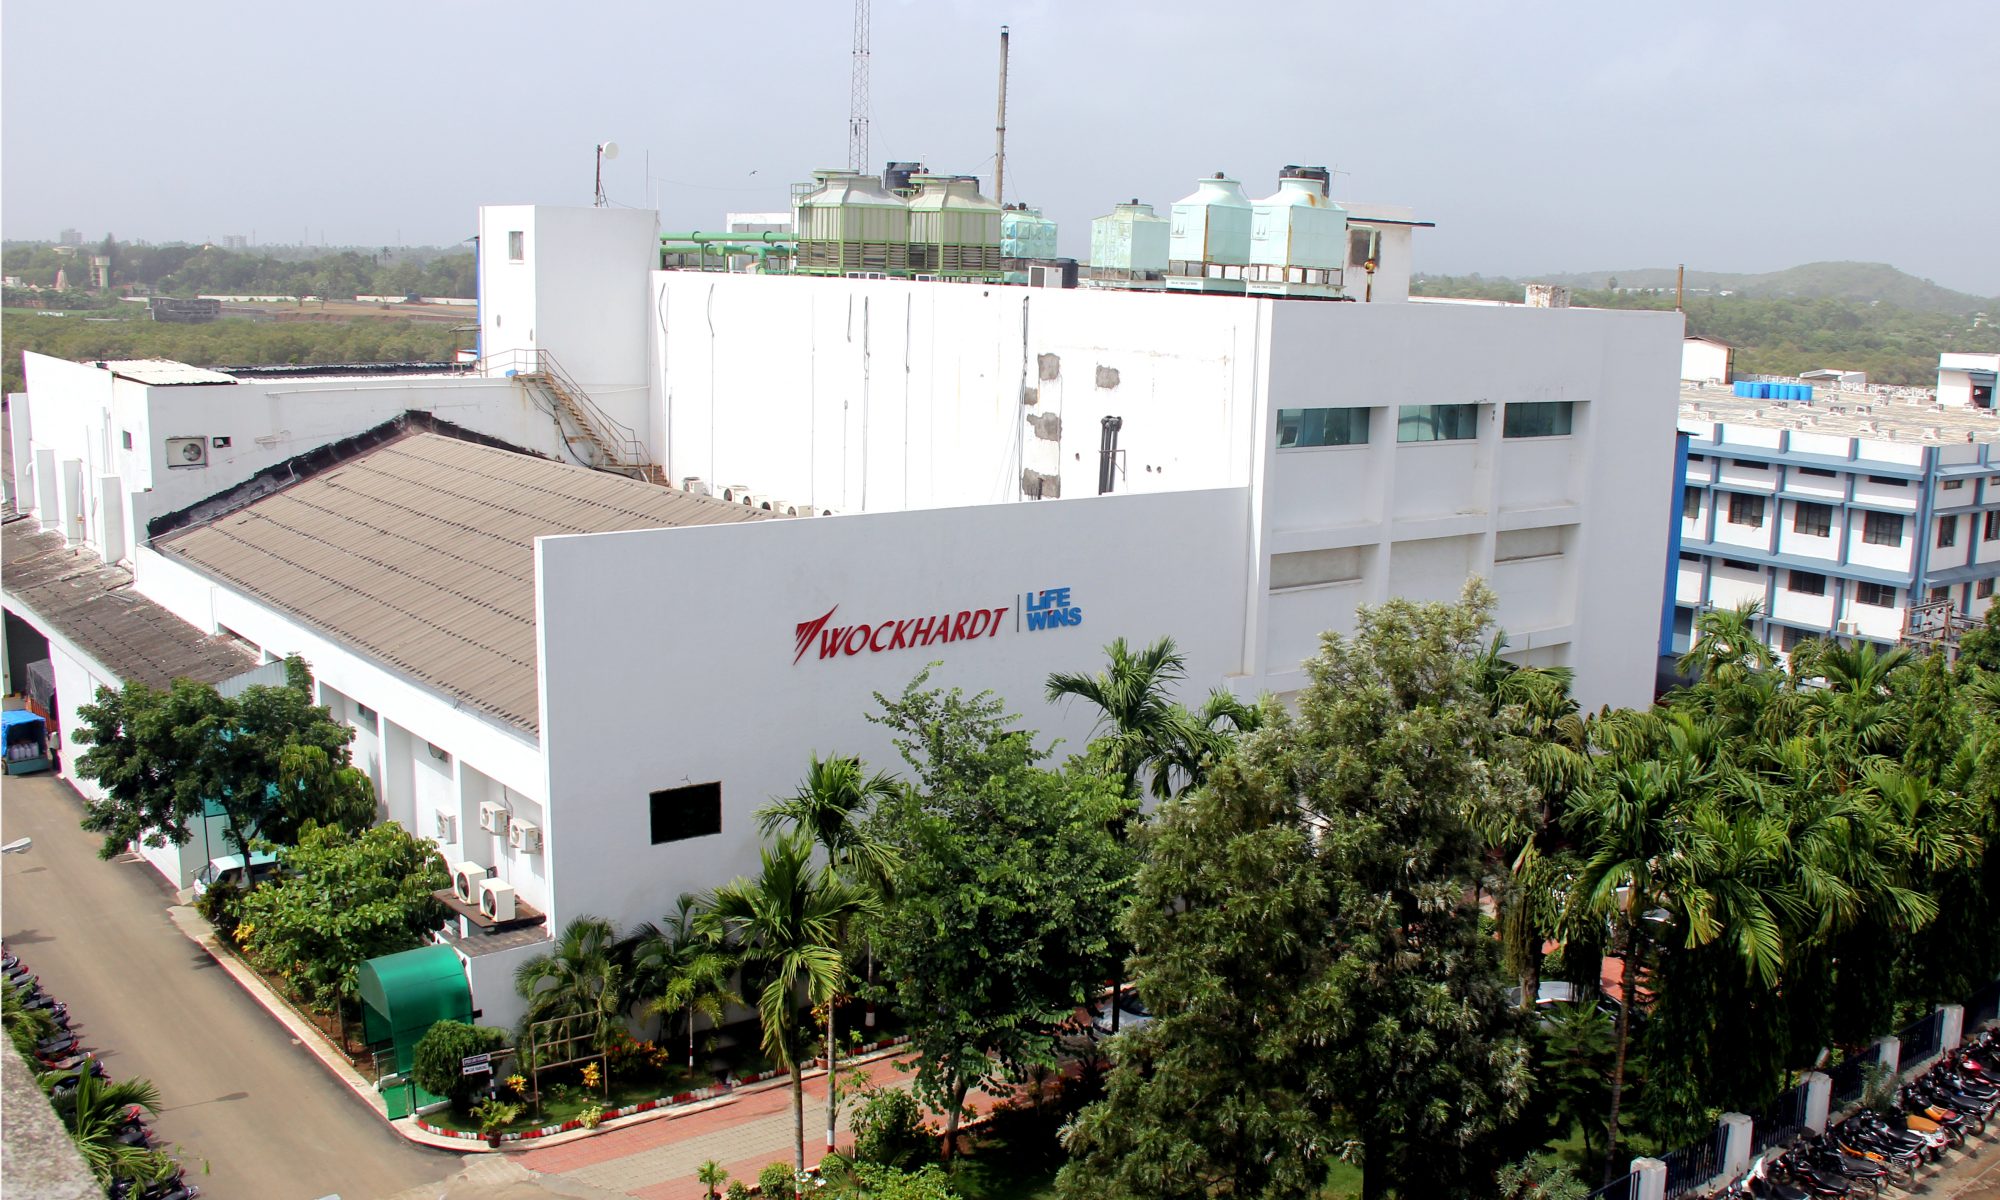 Manufacturing facilities